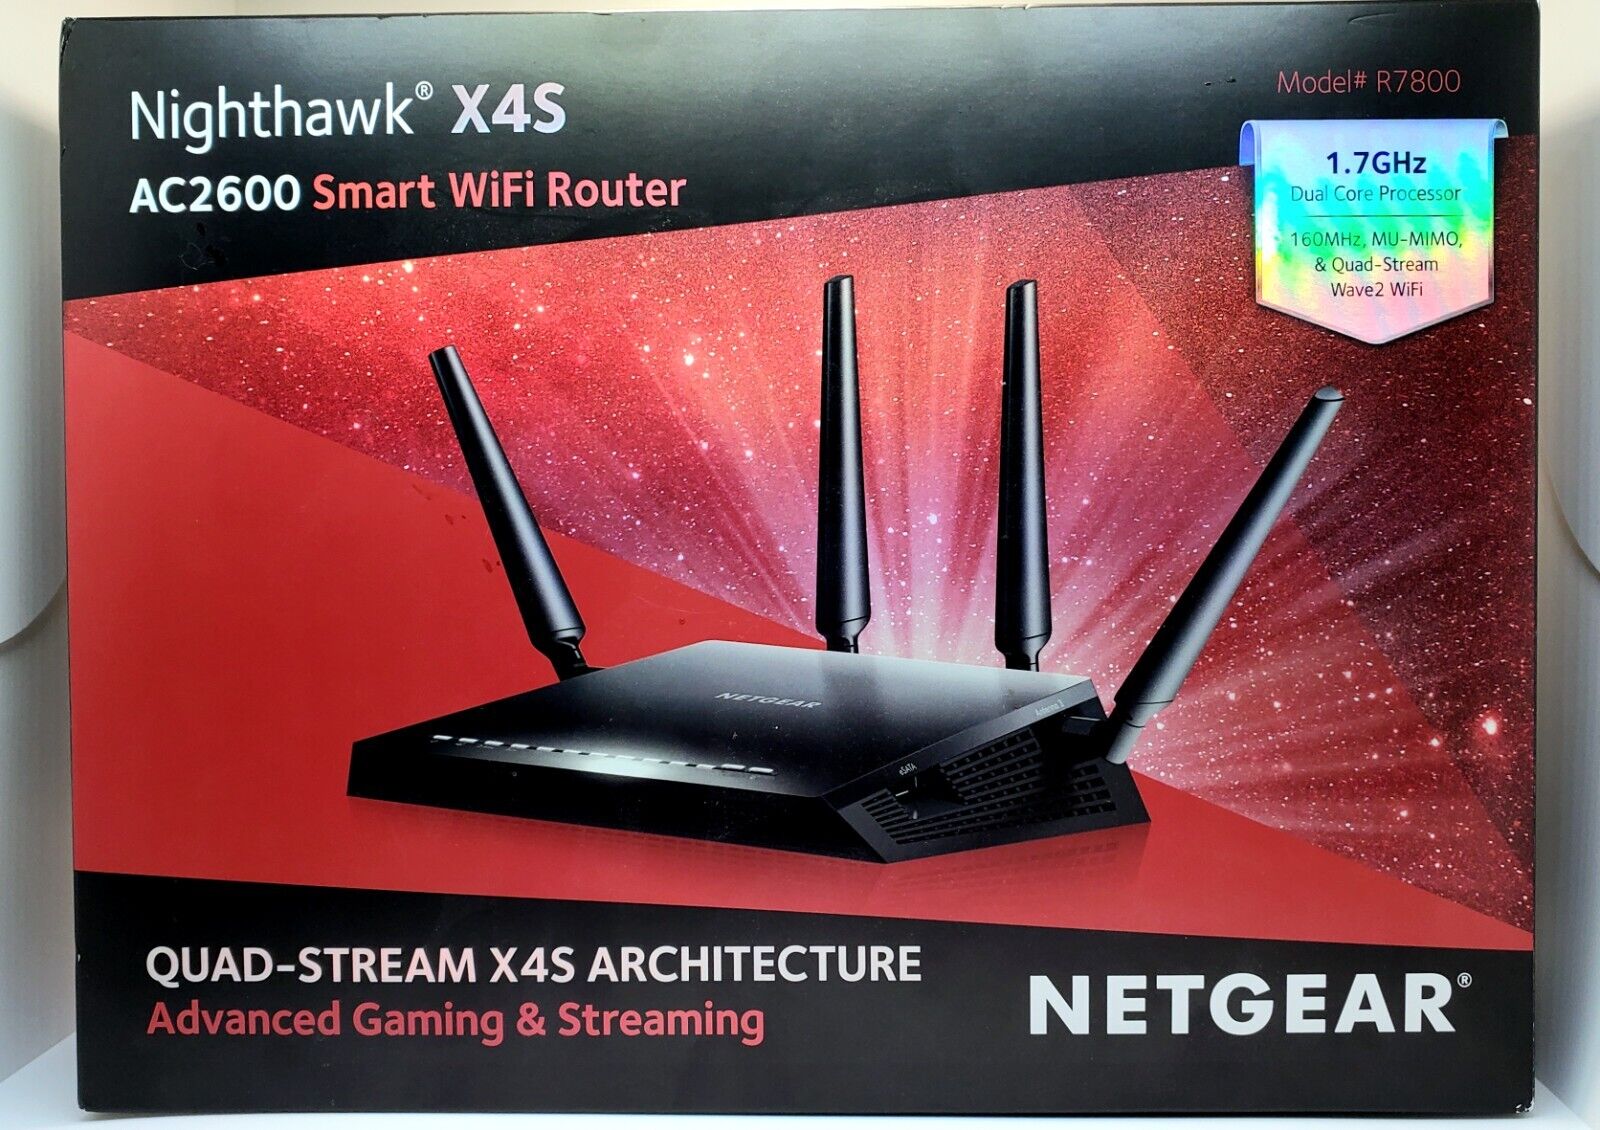 NETGEAR Nighthawk X4S AC2600 R7800-100NAS Smart WiFi Router